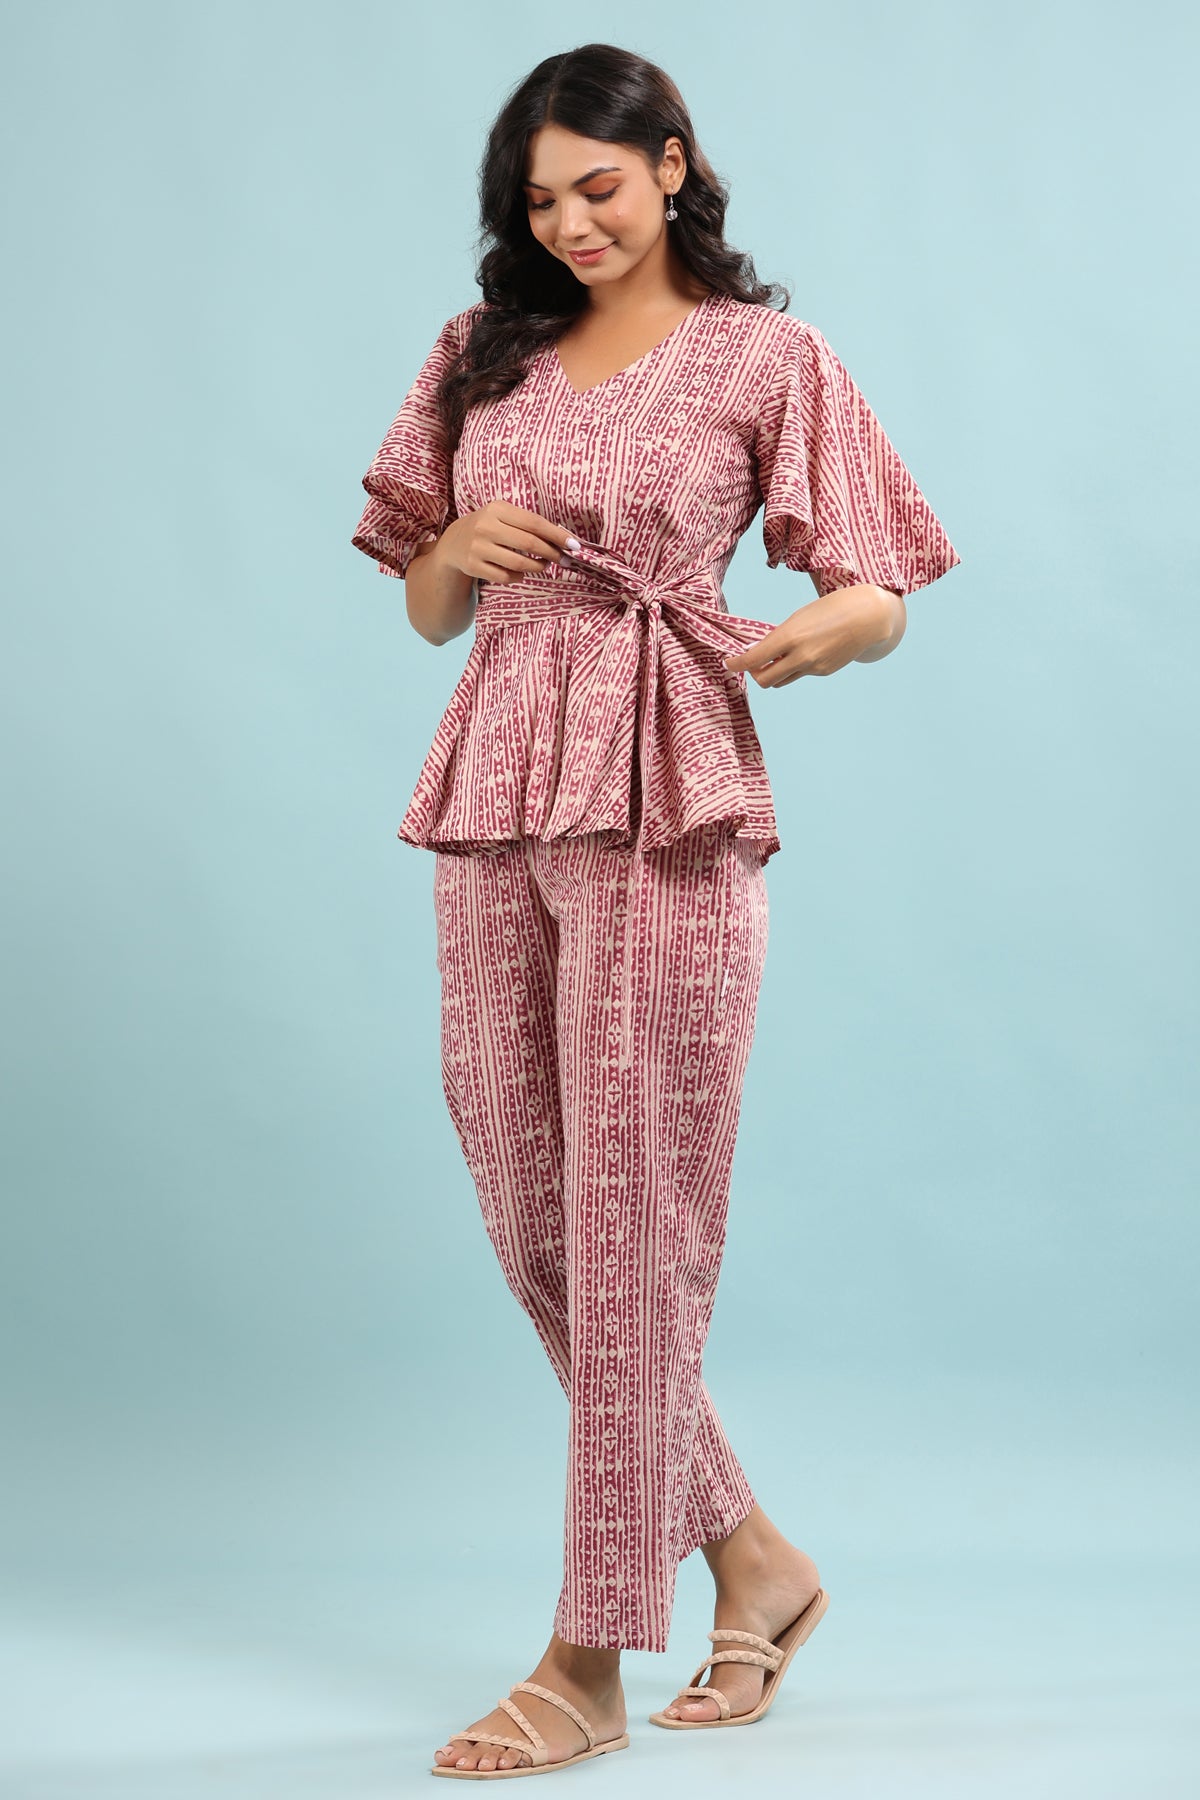 Patterned Print On Pink Loungewear Set